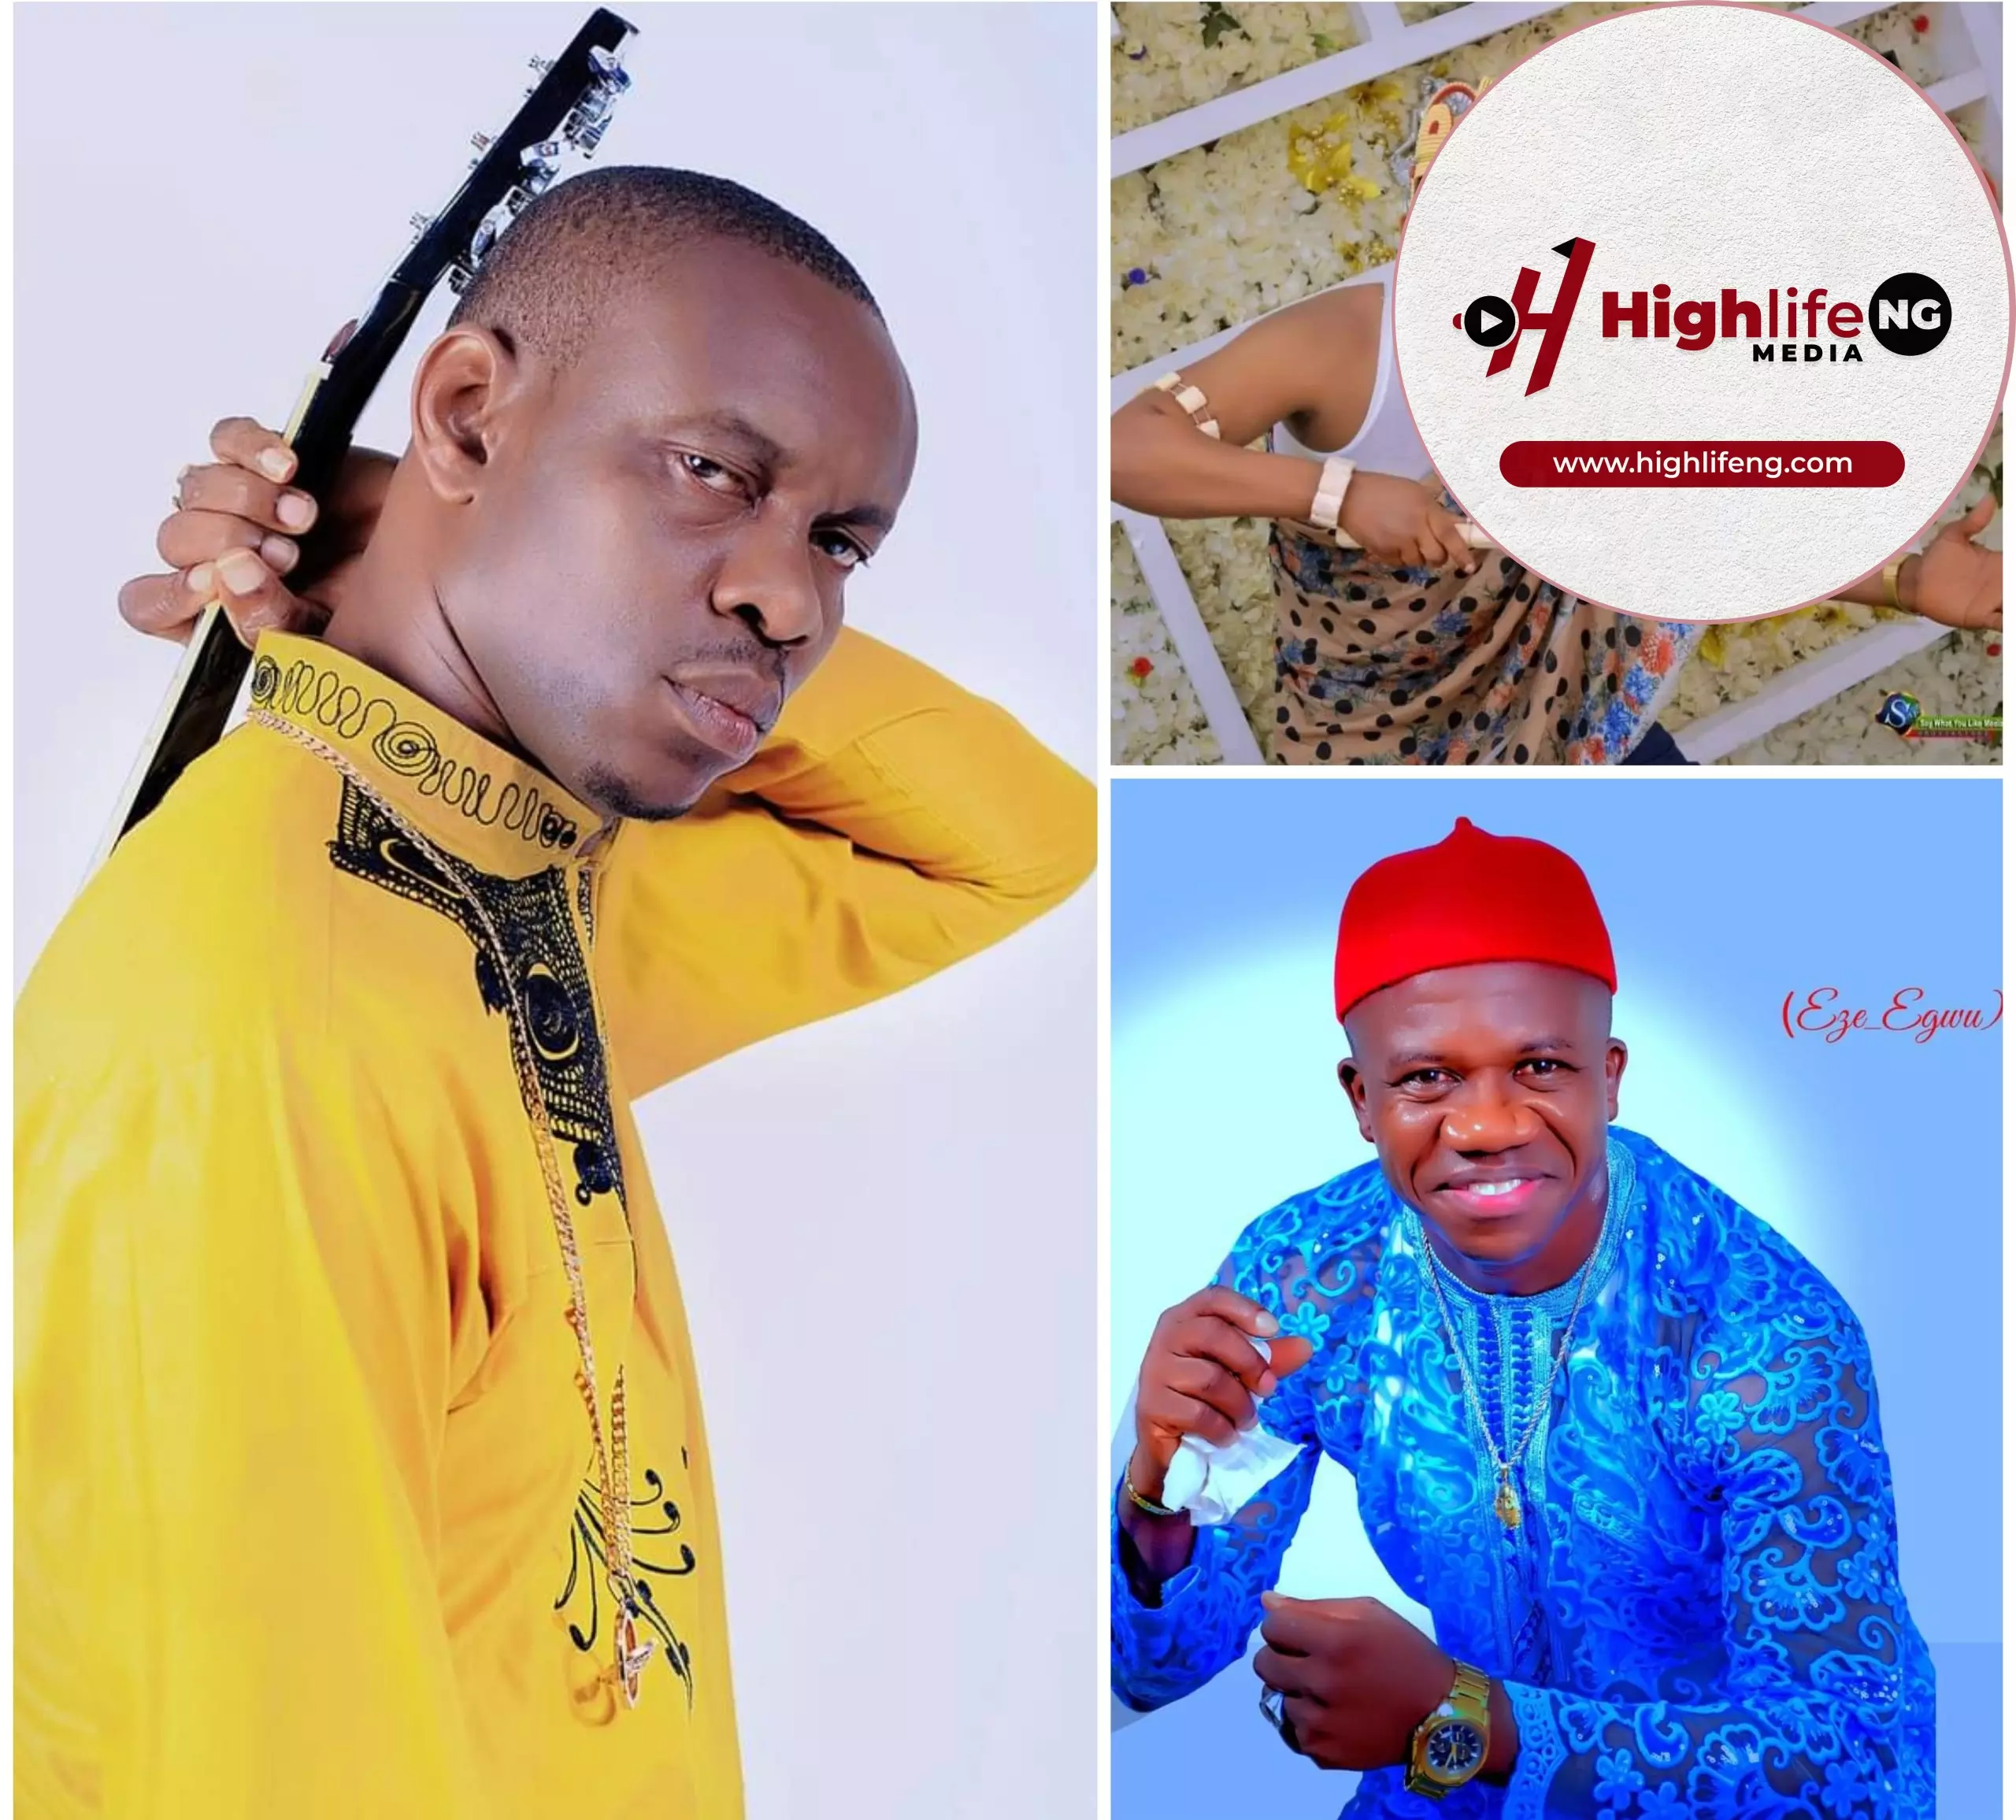 Top 3 Kings of highlife music in Igbo Land, Nigeria (Best in 2022)